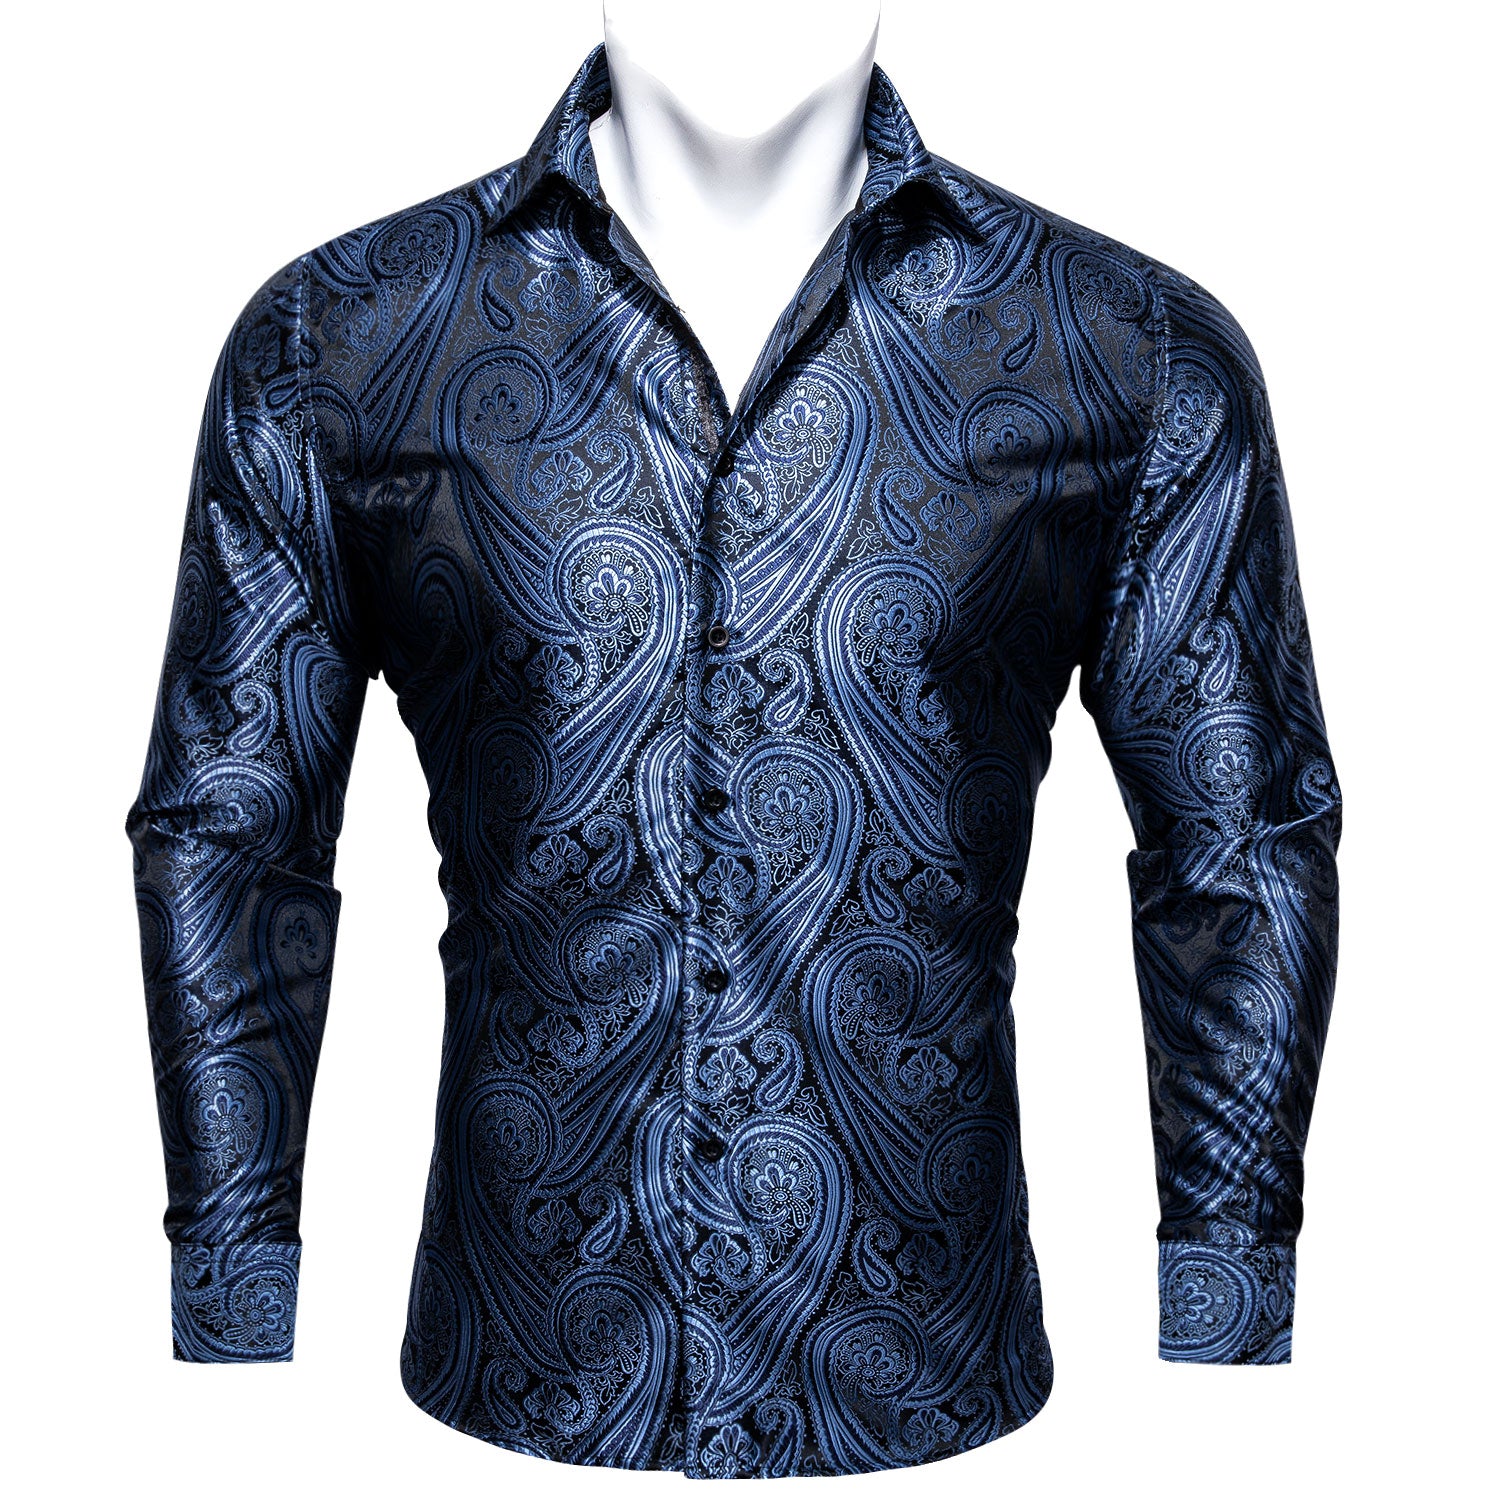 Barry.wang Blue Black Paisley Silk Men's Long Sleeve Shirt